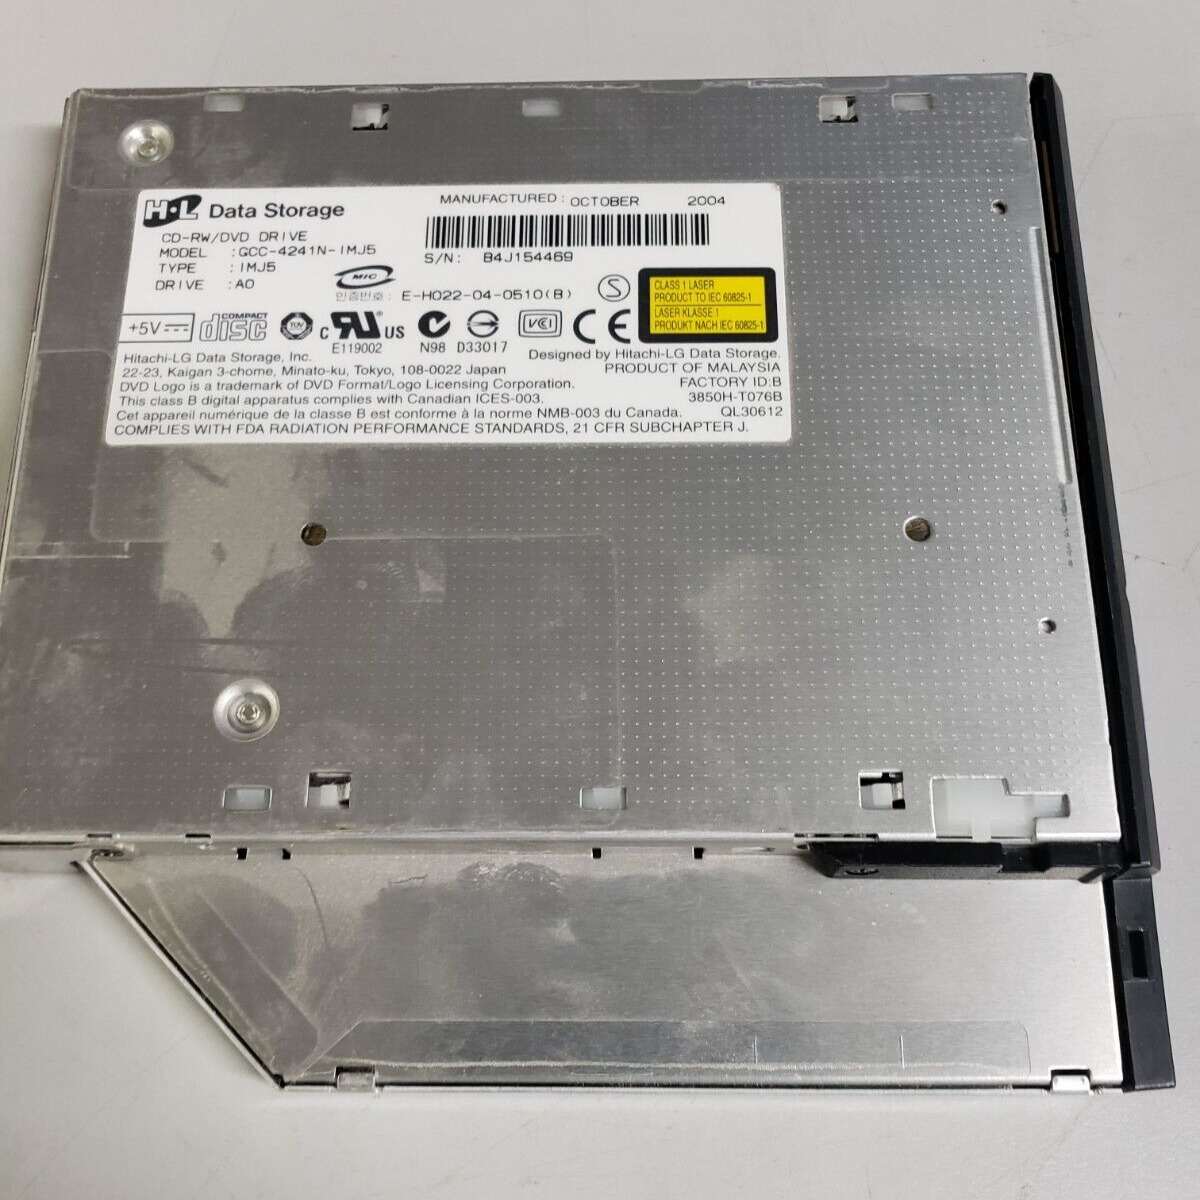 Original IBM Laptop / H-L Data Storage Internal DVD/CD-RW Combo Model GCC-4241N